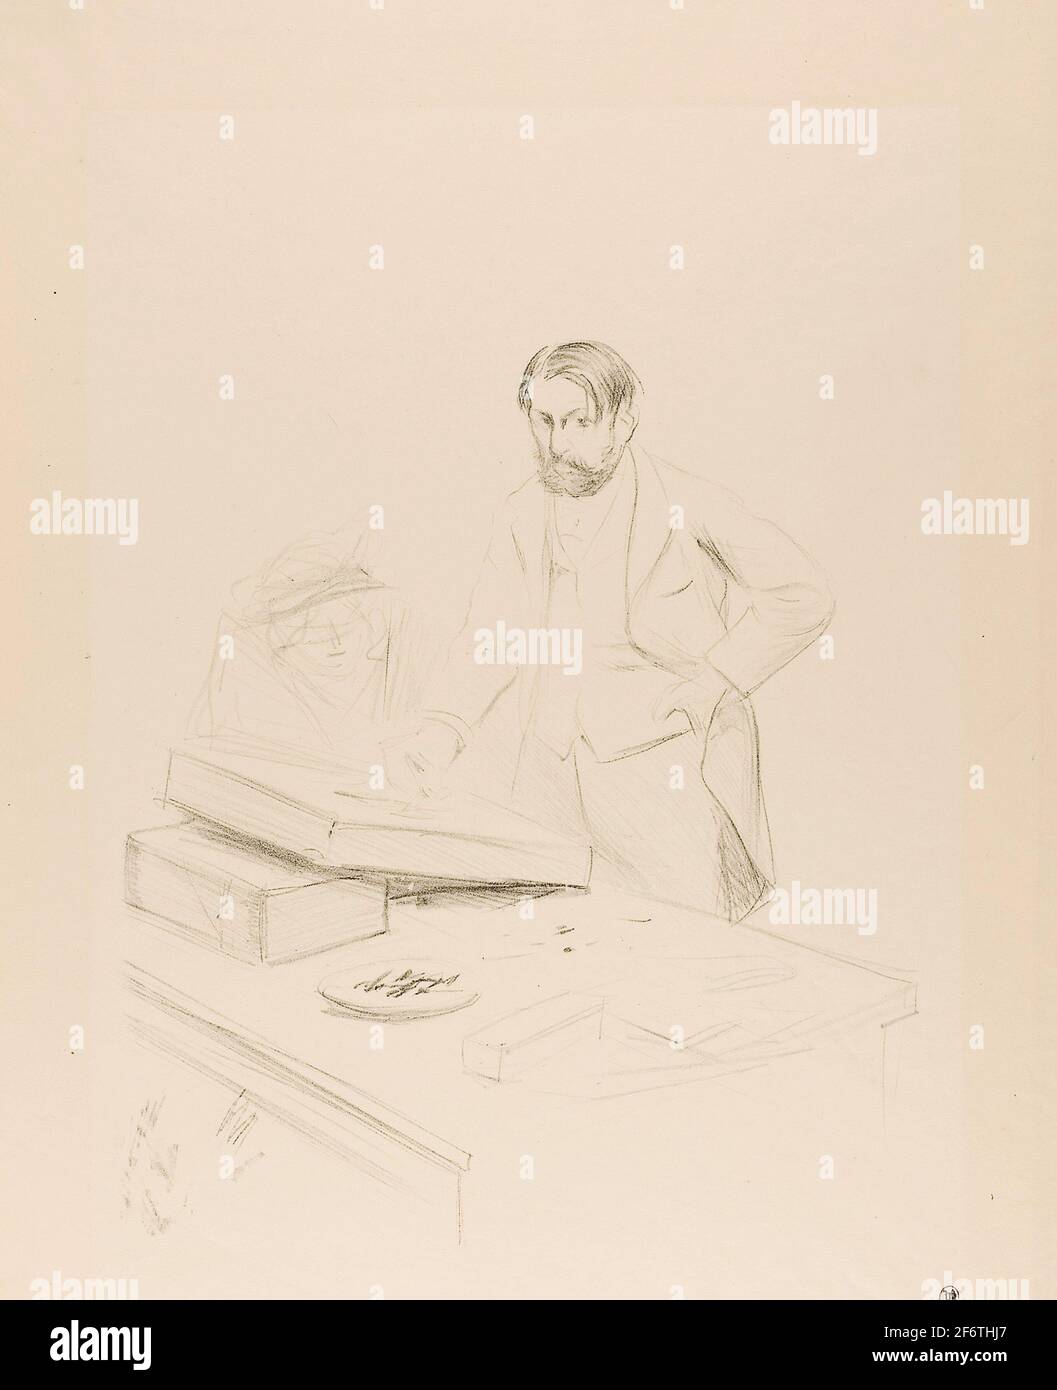 Author: Jean Louis Forain. Forain, Lithographer - c. 1895 - Jean Louis Forain French, 1852-1931. Lithograph on white vellum paper. 1890 - 1900. Stock Photo